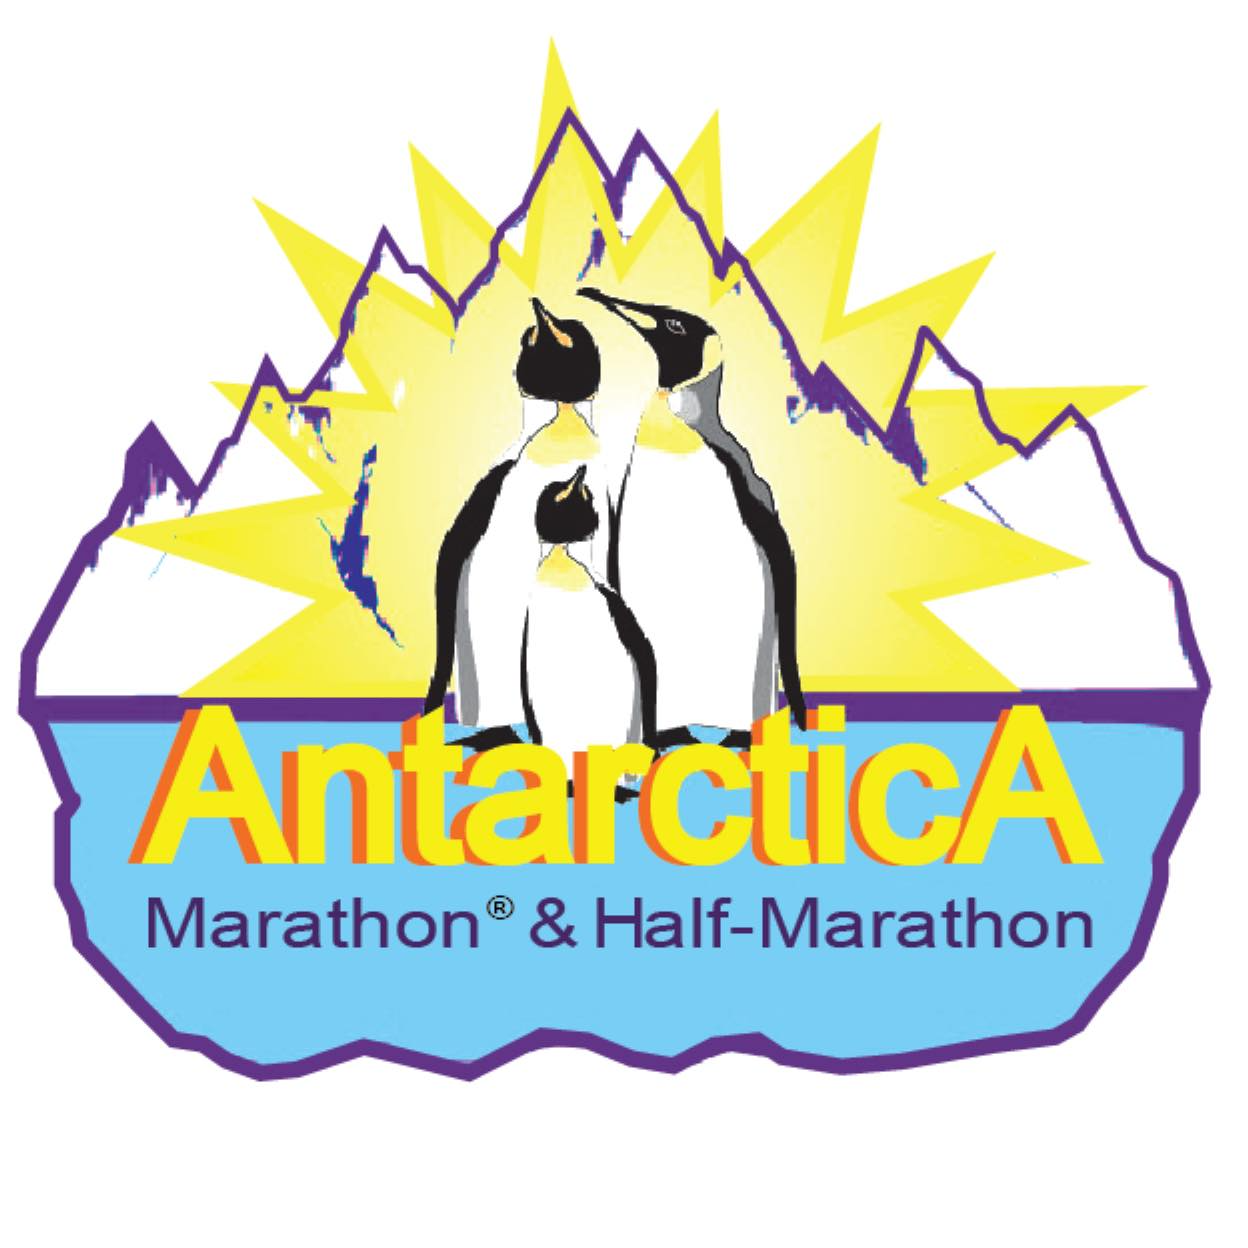 Antarctica Marathon & Half Marathon